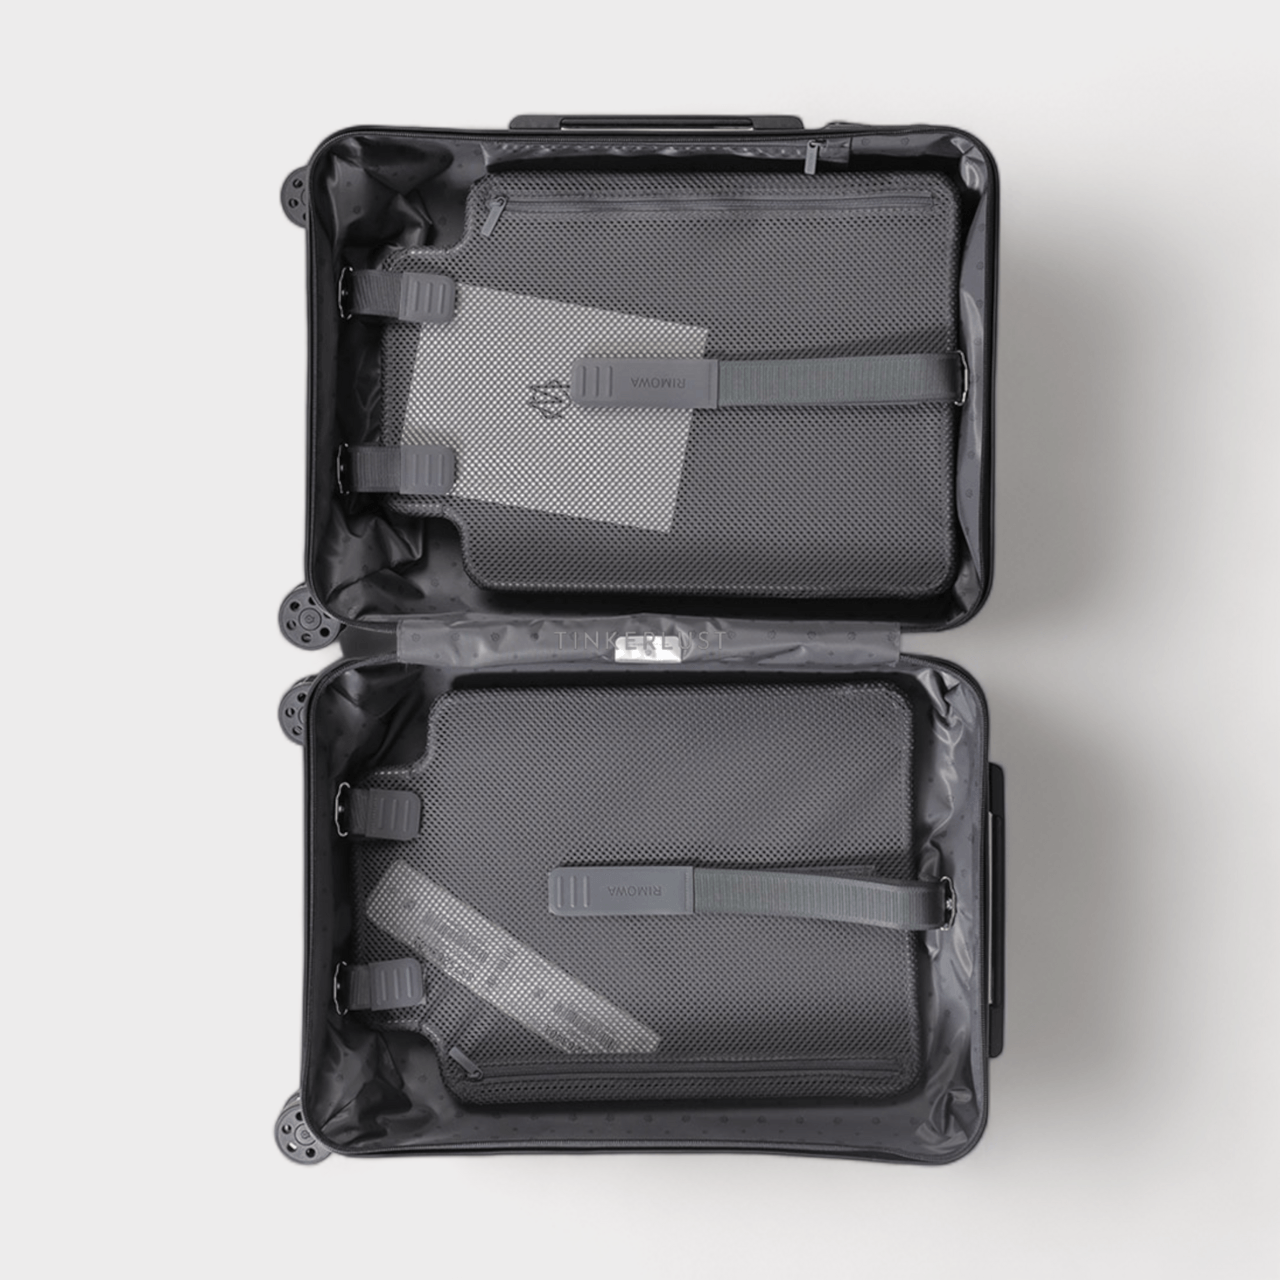 Rimowa Cabin S Suitcase in Black Matte Polycarbonate Travel